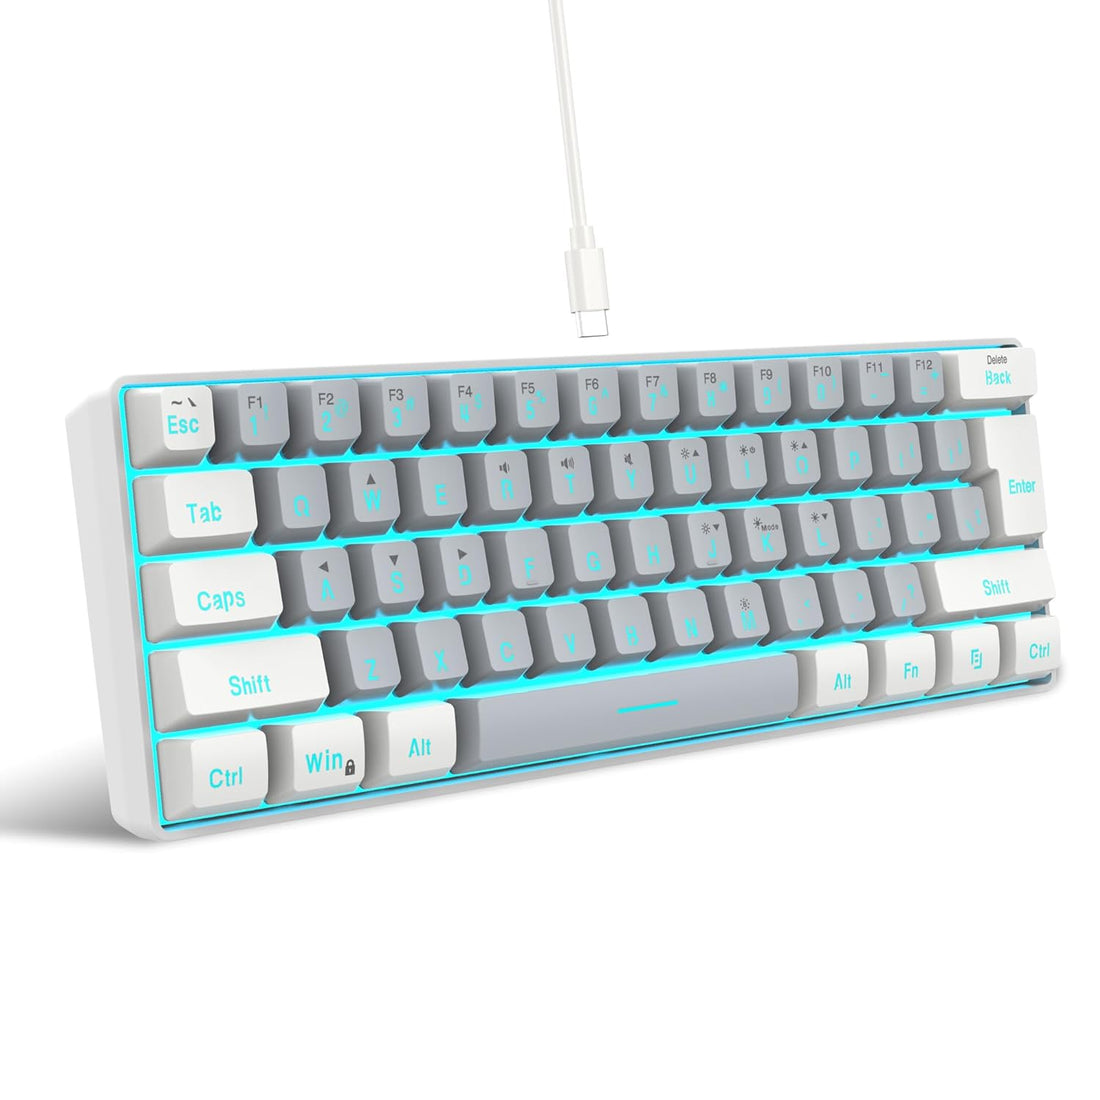 Snpurdiri 60% Wired Gaming Keyboard, RGB Backlit Mini Keyboard, Waterproof Small Ultra-Compact 61 Keys Keyboard for PC/Mac Gamer, Typist, Travel, Easy to Carry on Business Trip(White-Grey)